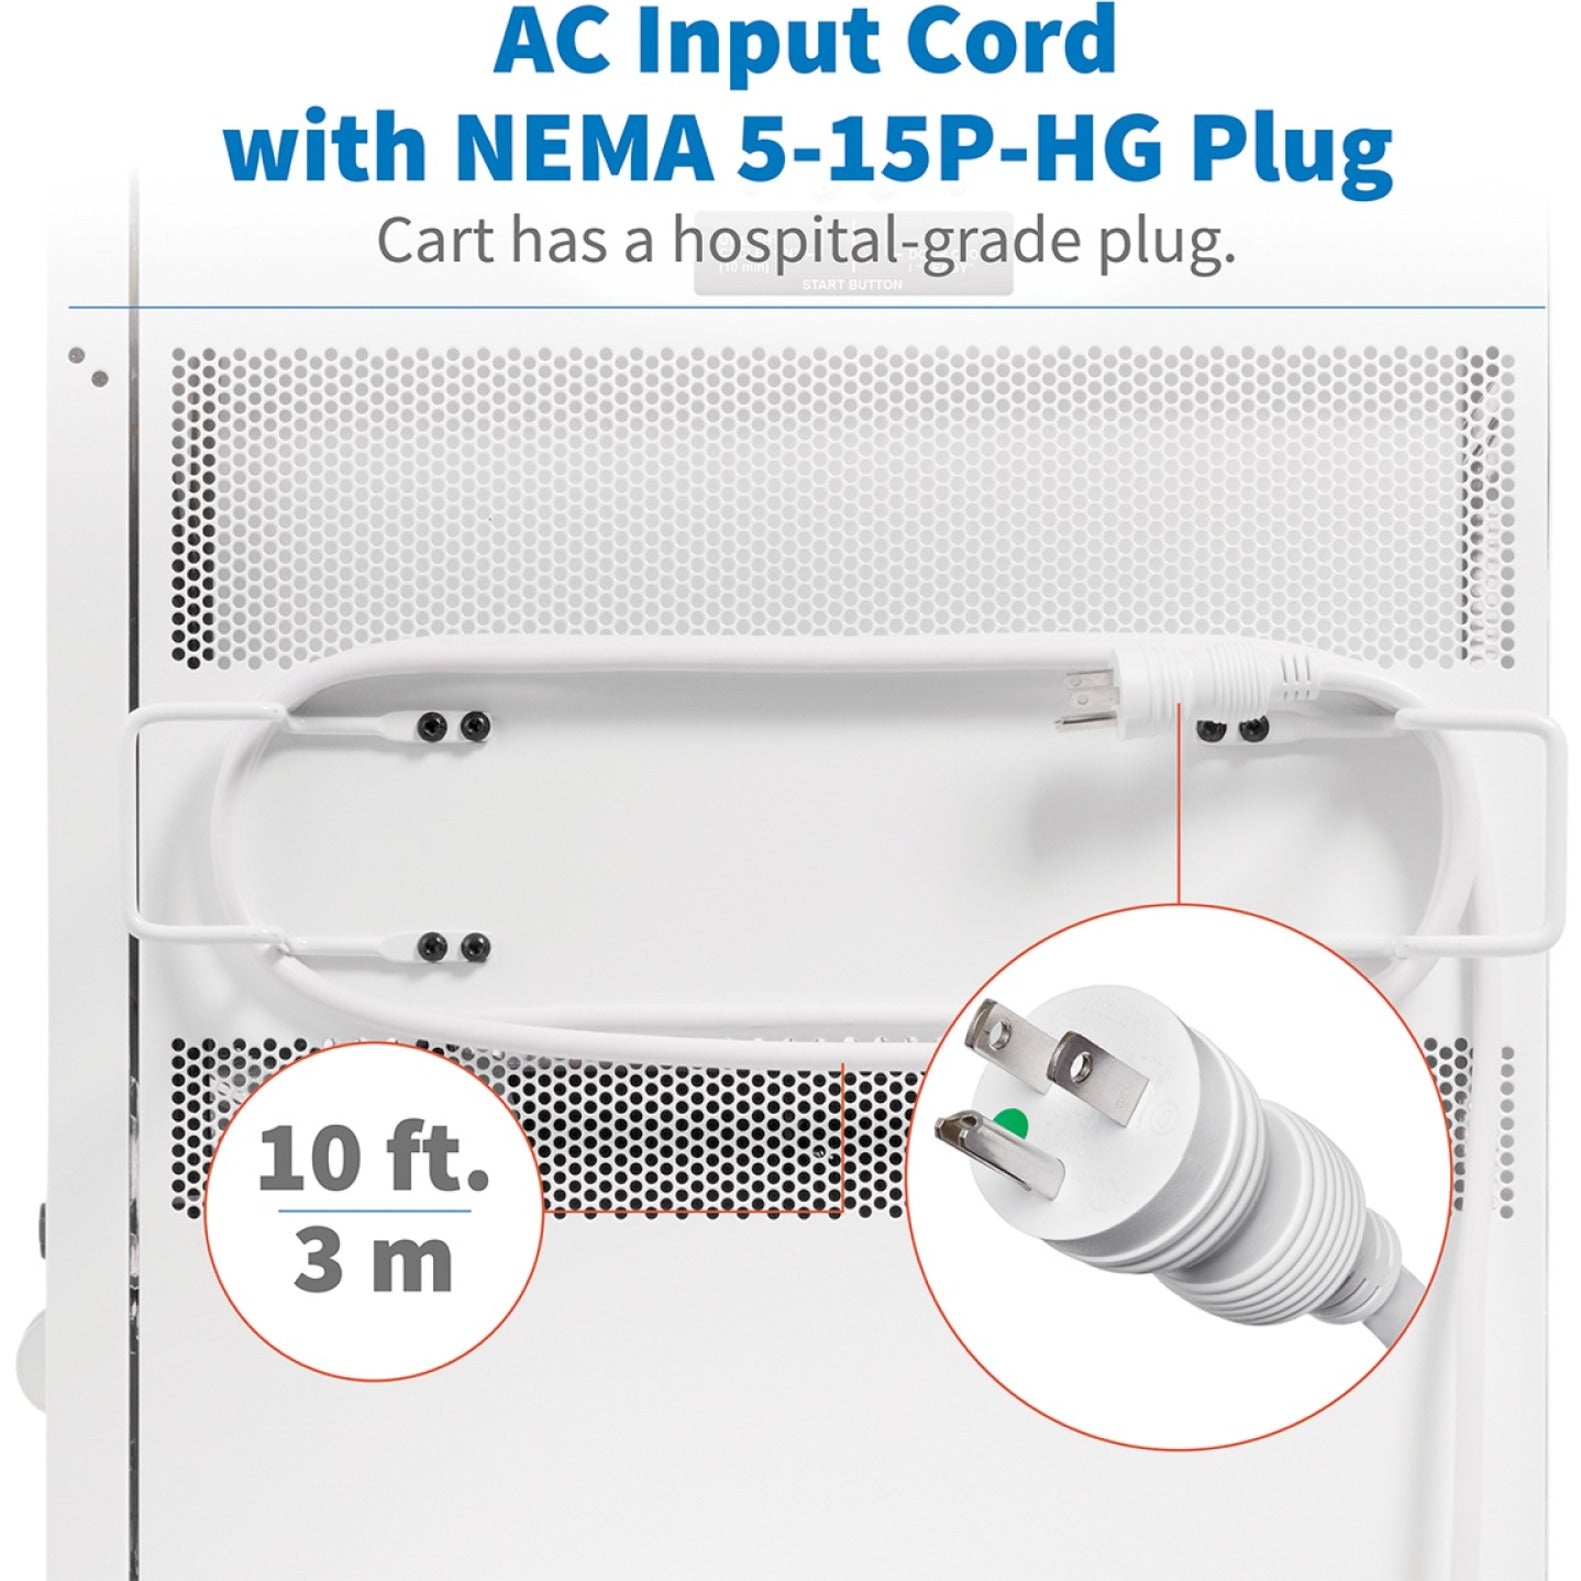 Tripp Lite CSC32USBWHG Hospital-Grade 32-Device UV Charging Cart, White, Grip Handle, Antibacterial, Cable Management